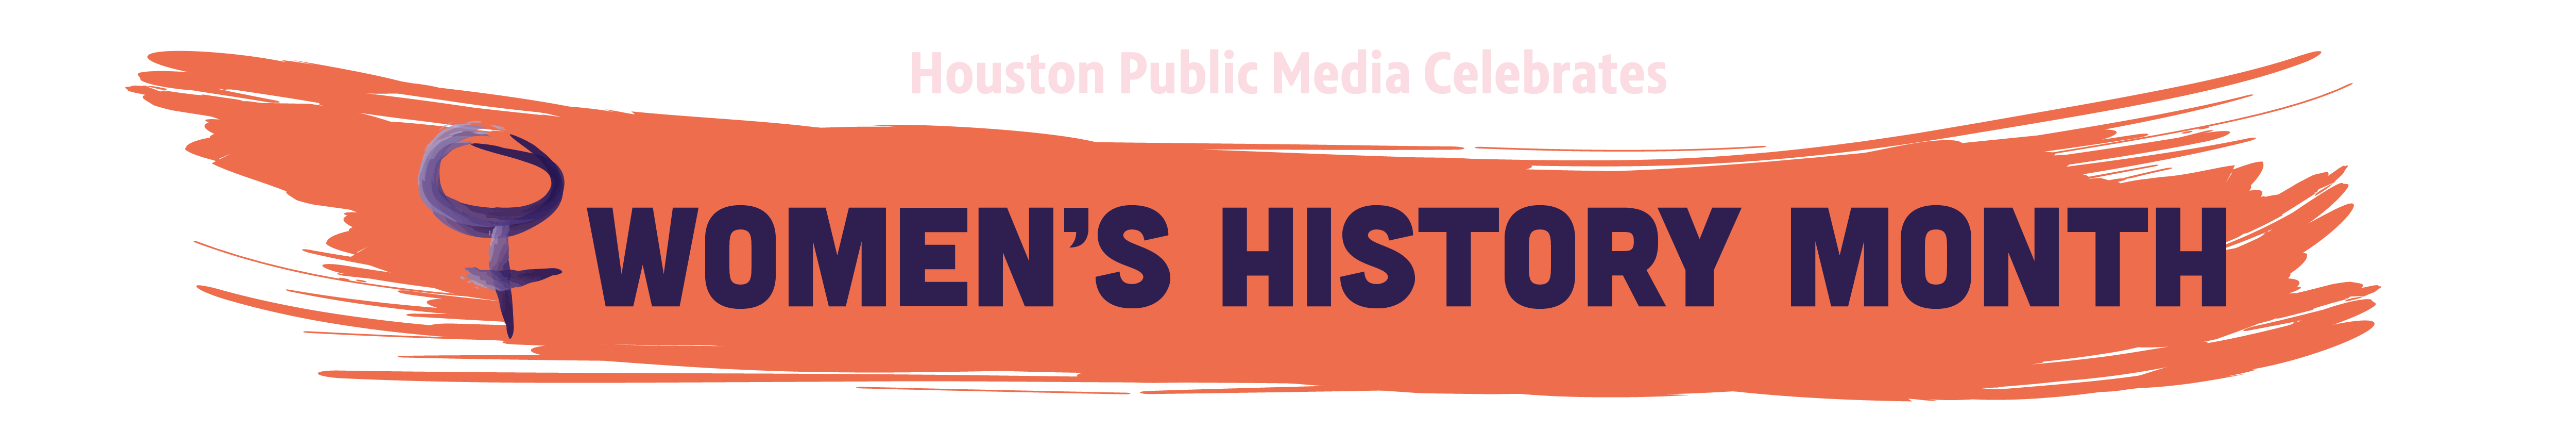 Houston Public Media Celebrates Women’s History Month page banner